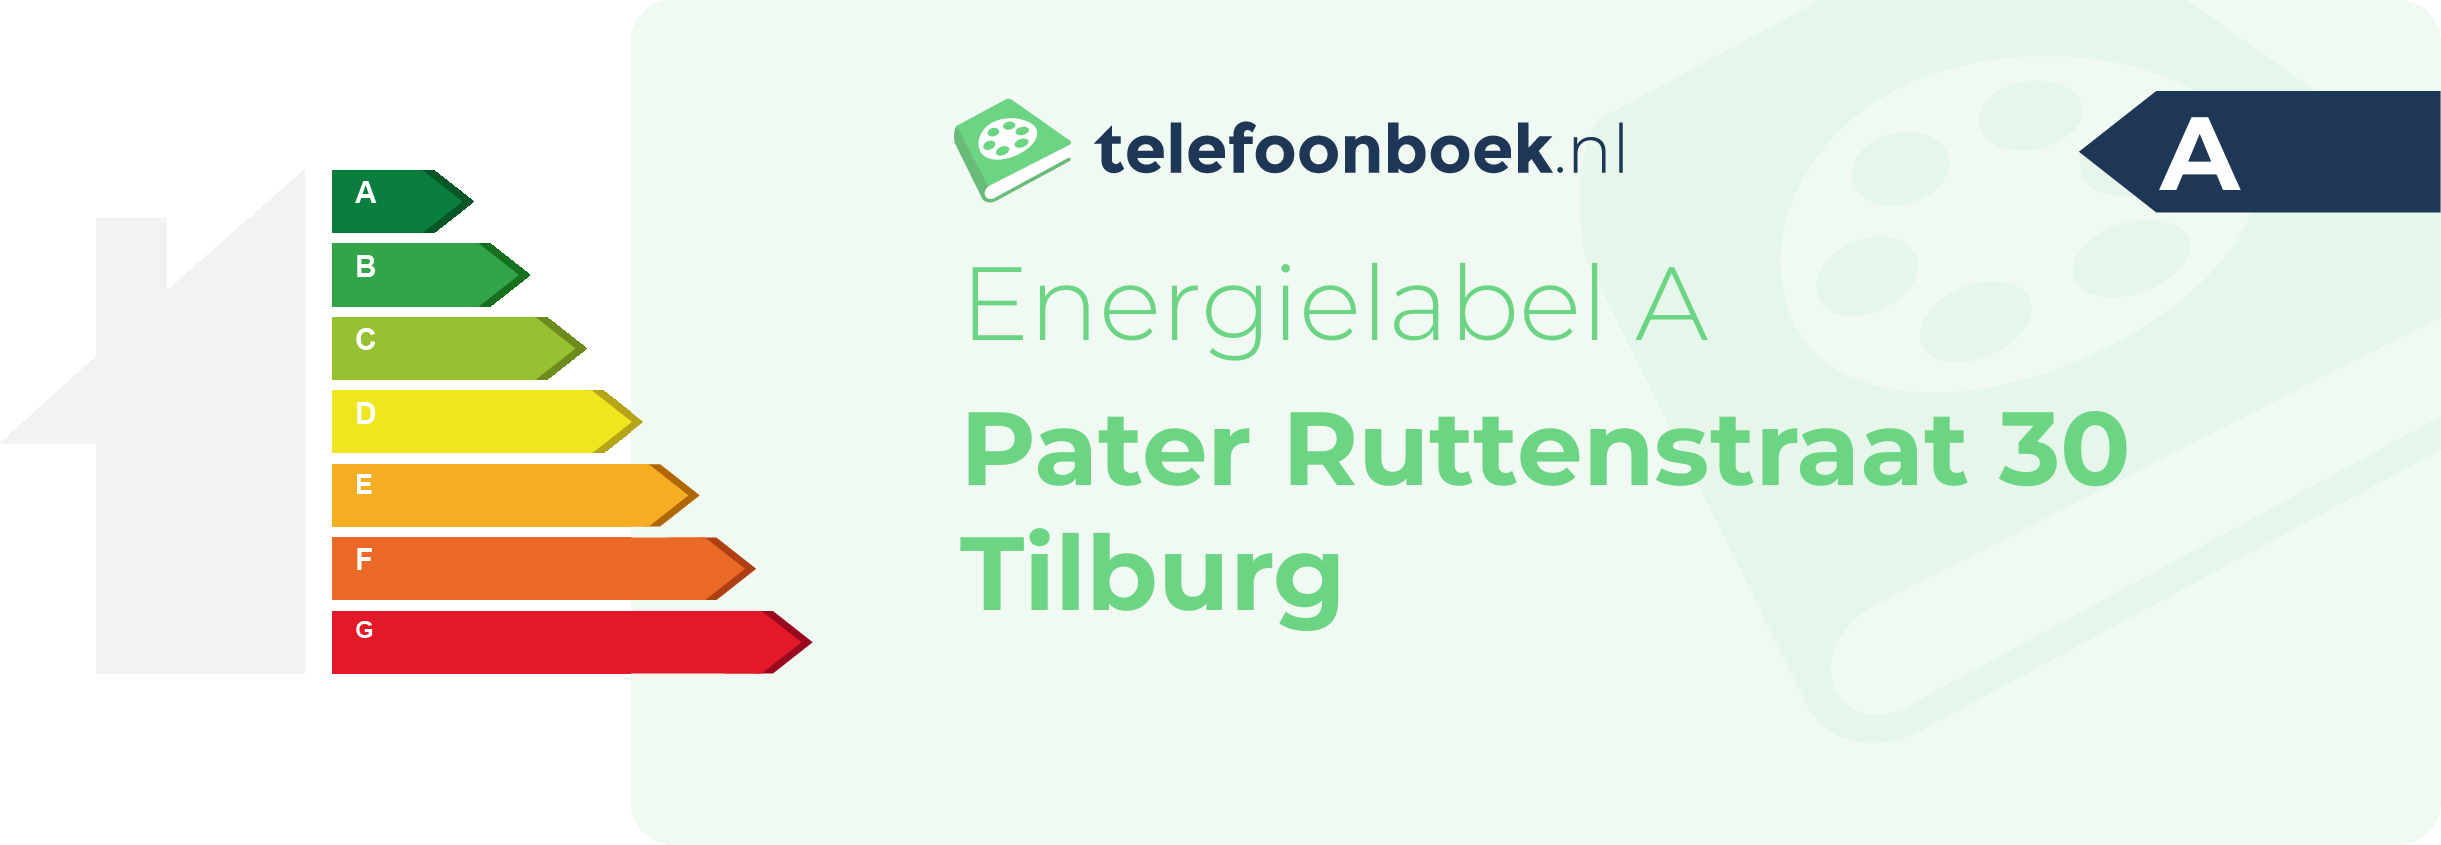 Energielabel Pater Ruttenstraat 30 Tilburg